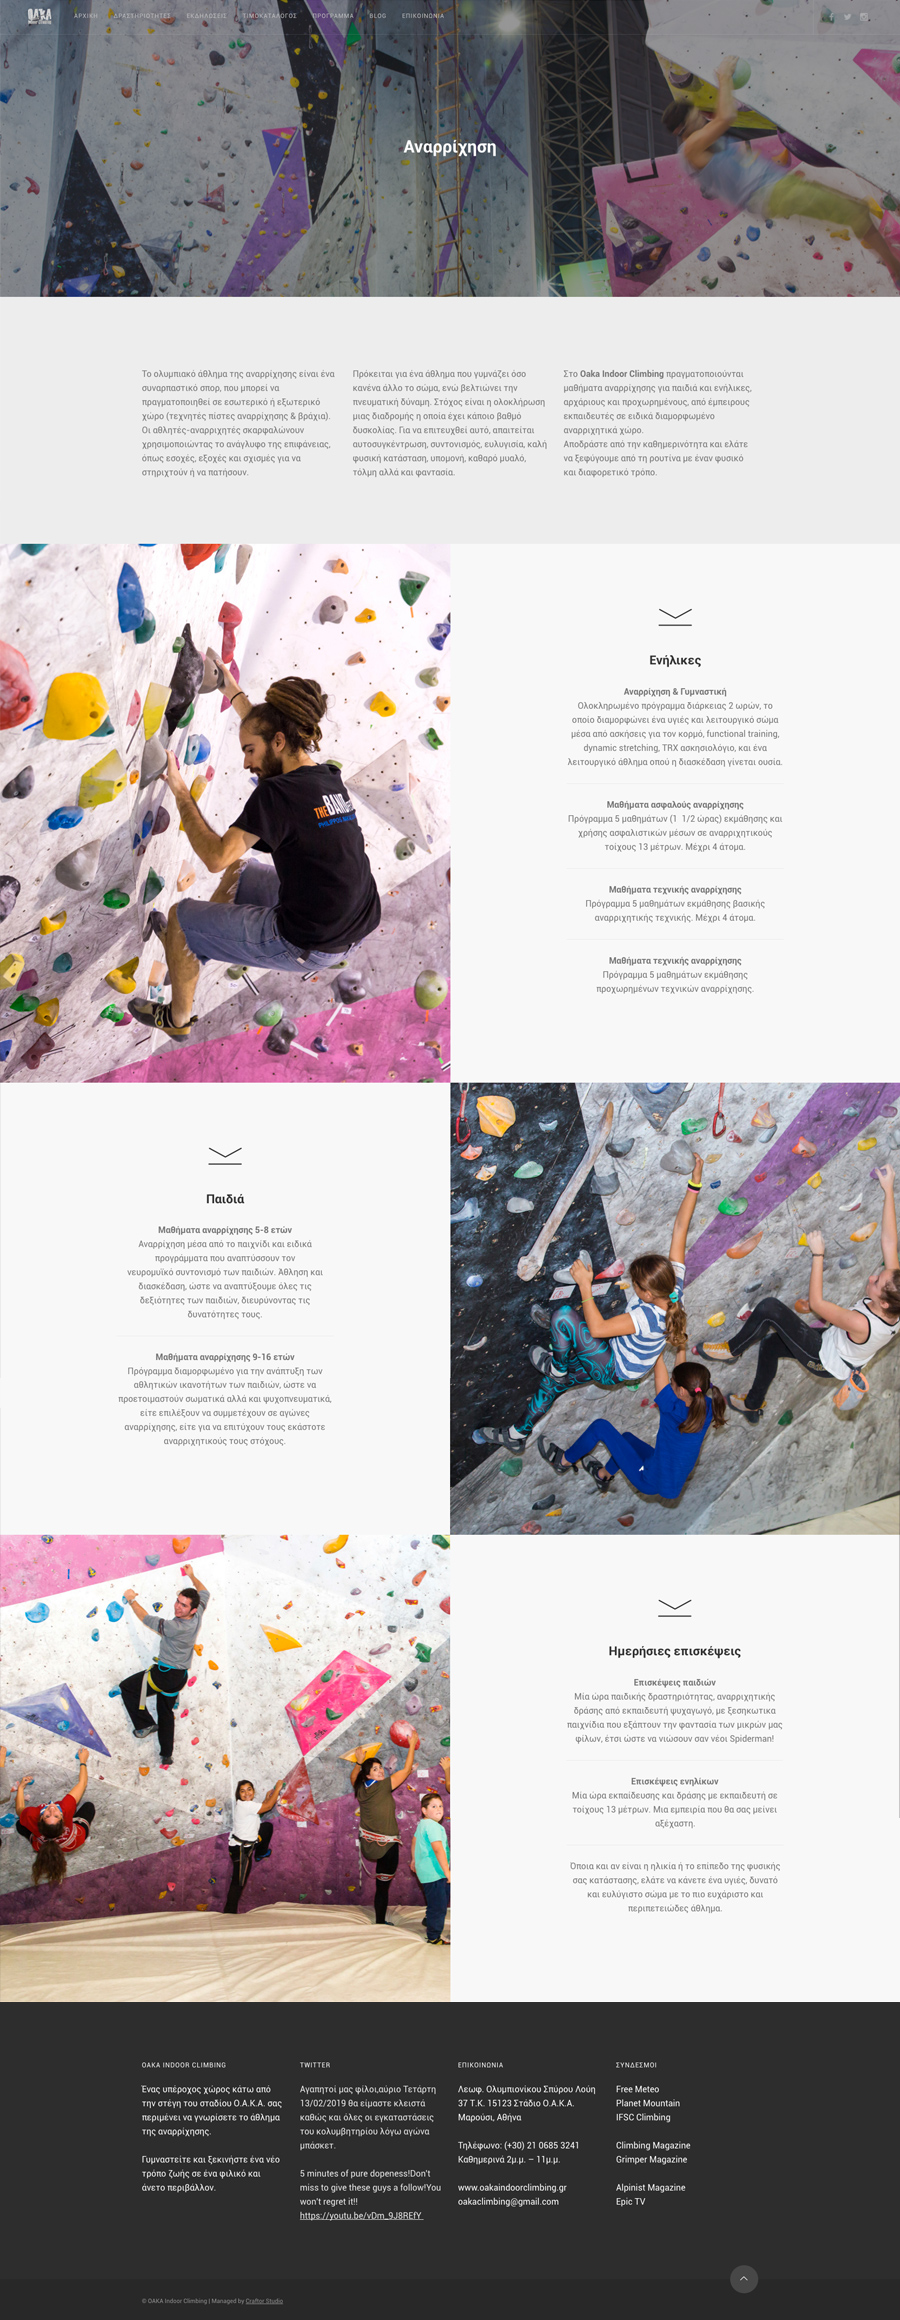 Oaka Indoor Climbing website